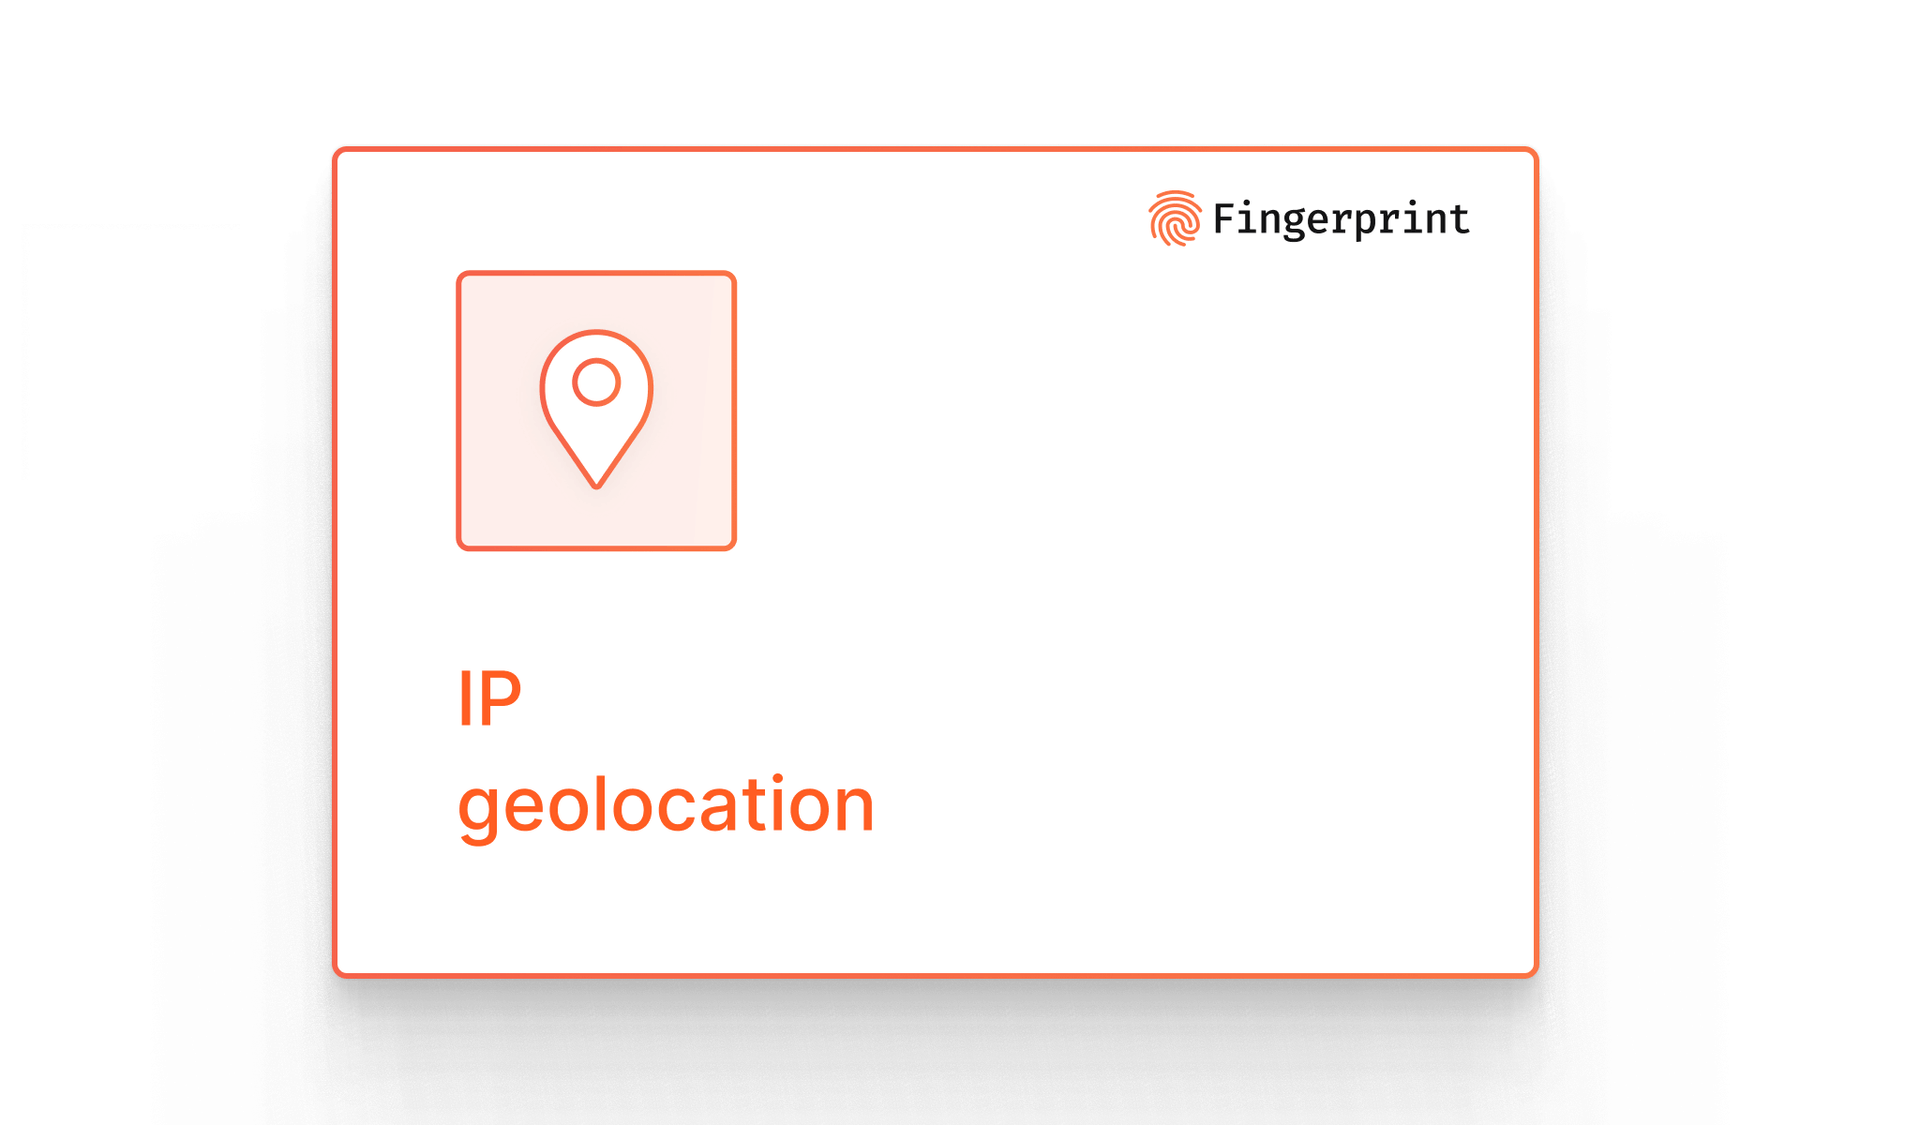 ip geolocation fingerprint